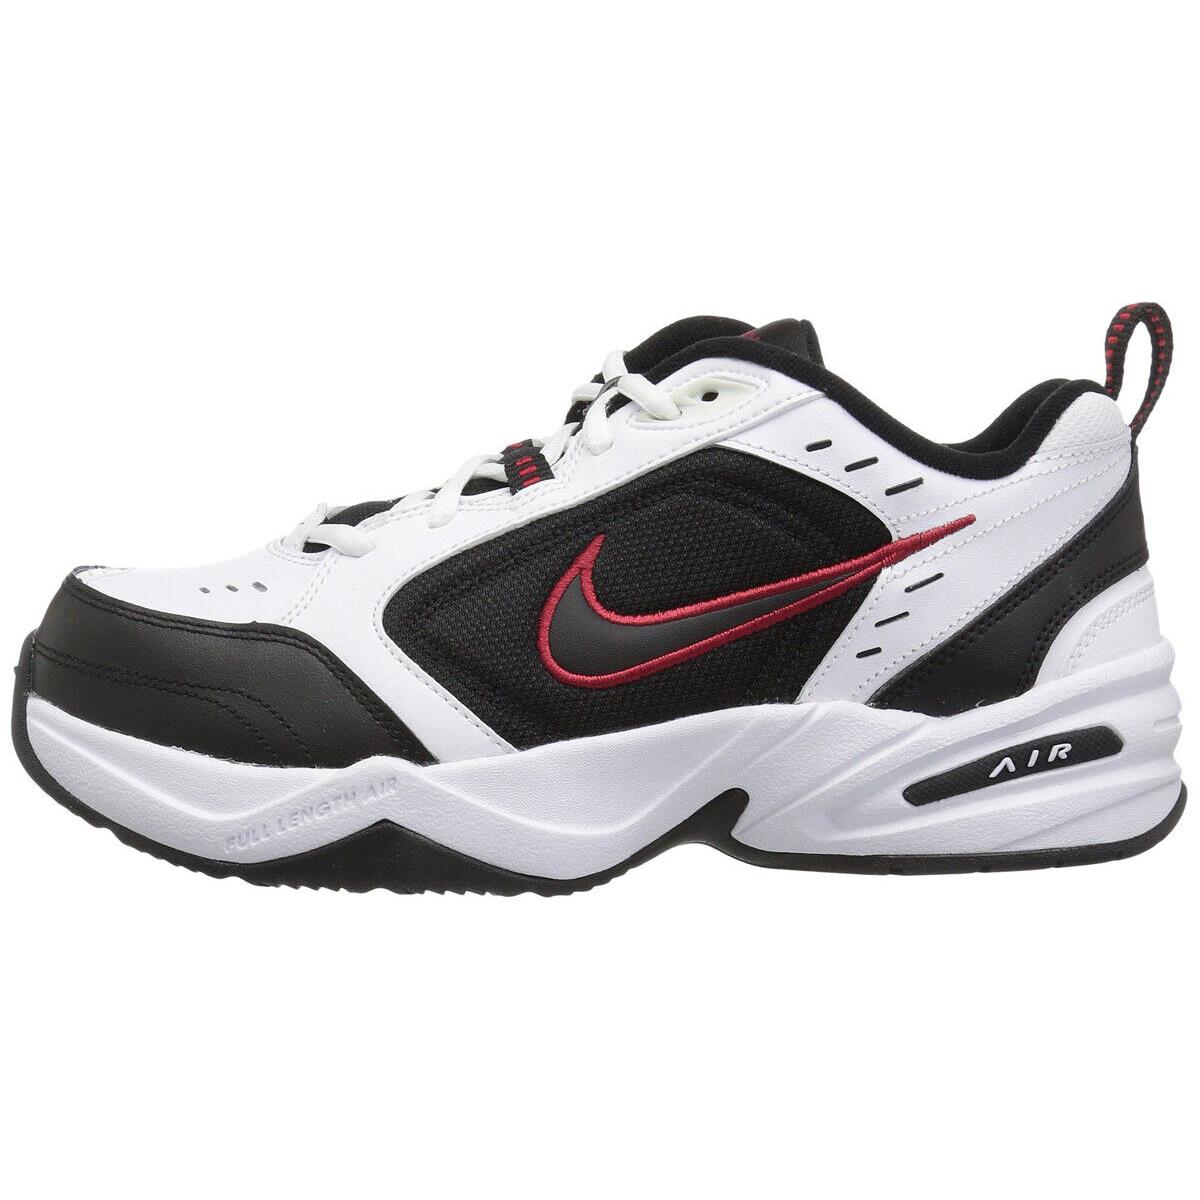 Nike Air Monarch IV 4 Trainer Athletic Men Size Shoes White/Black